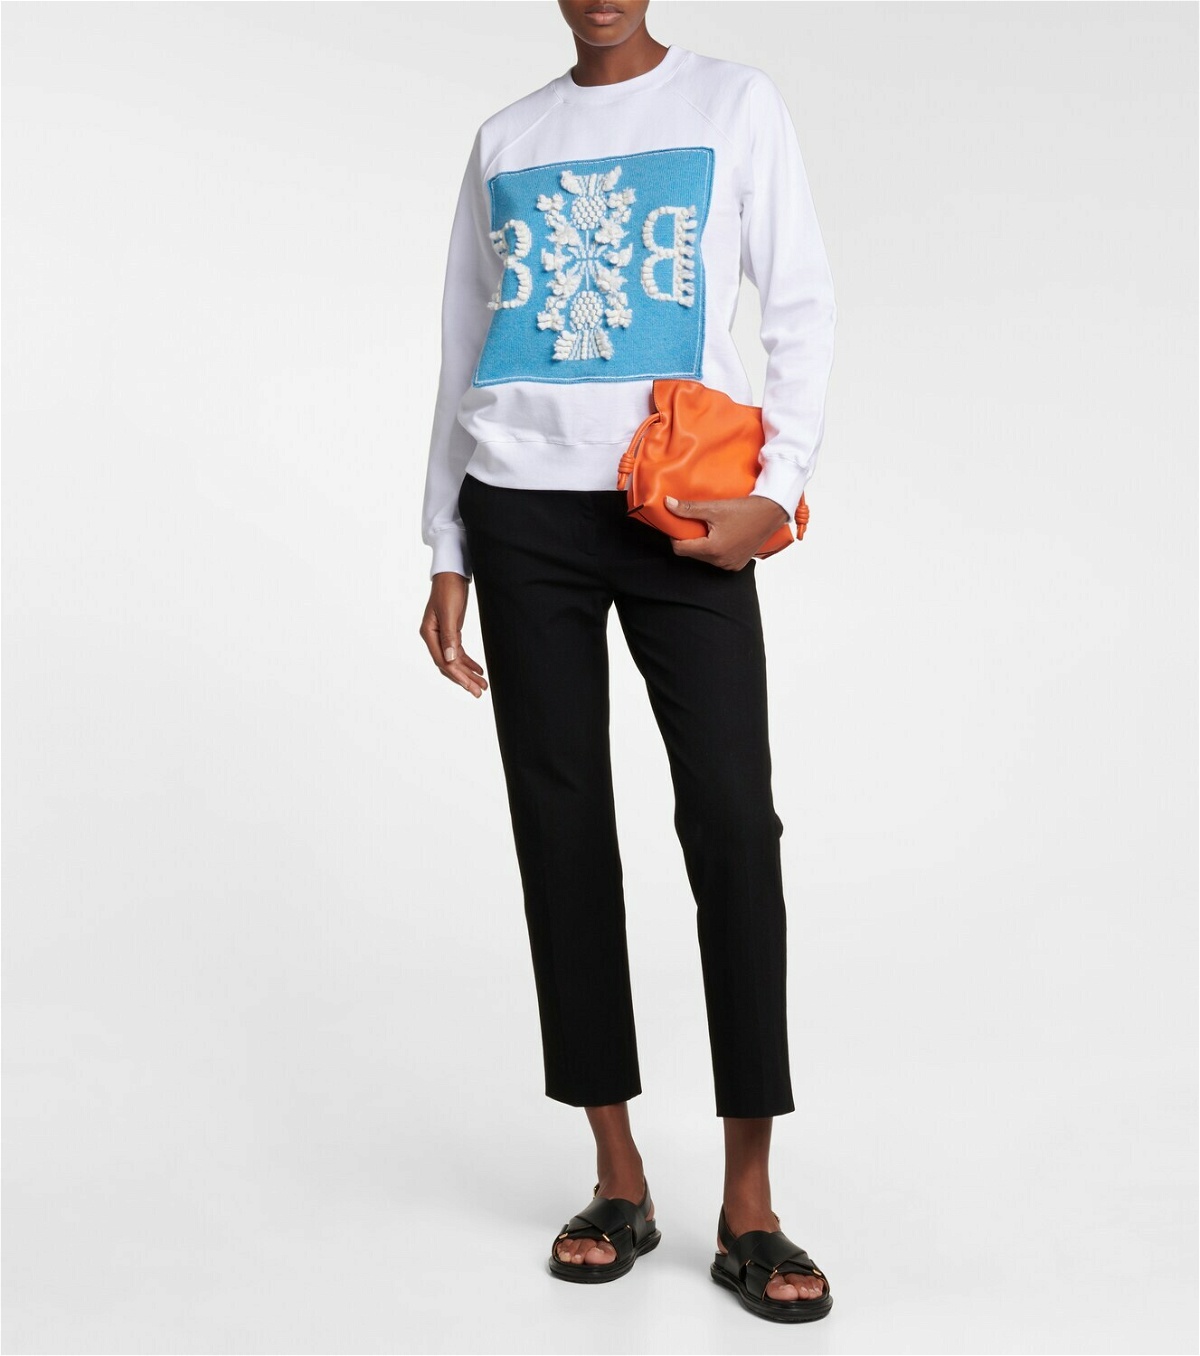 Barrie Cotton and cashmere logo sweatshirt